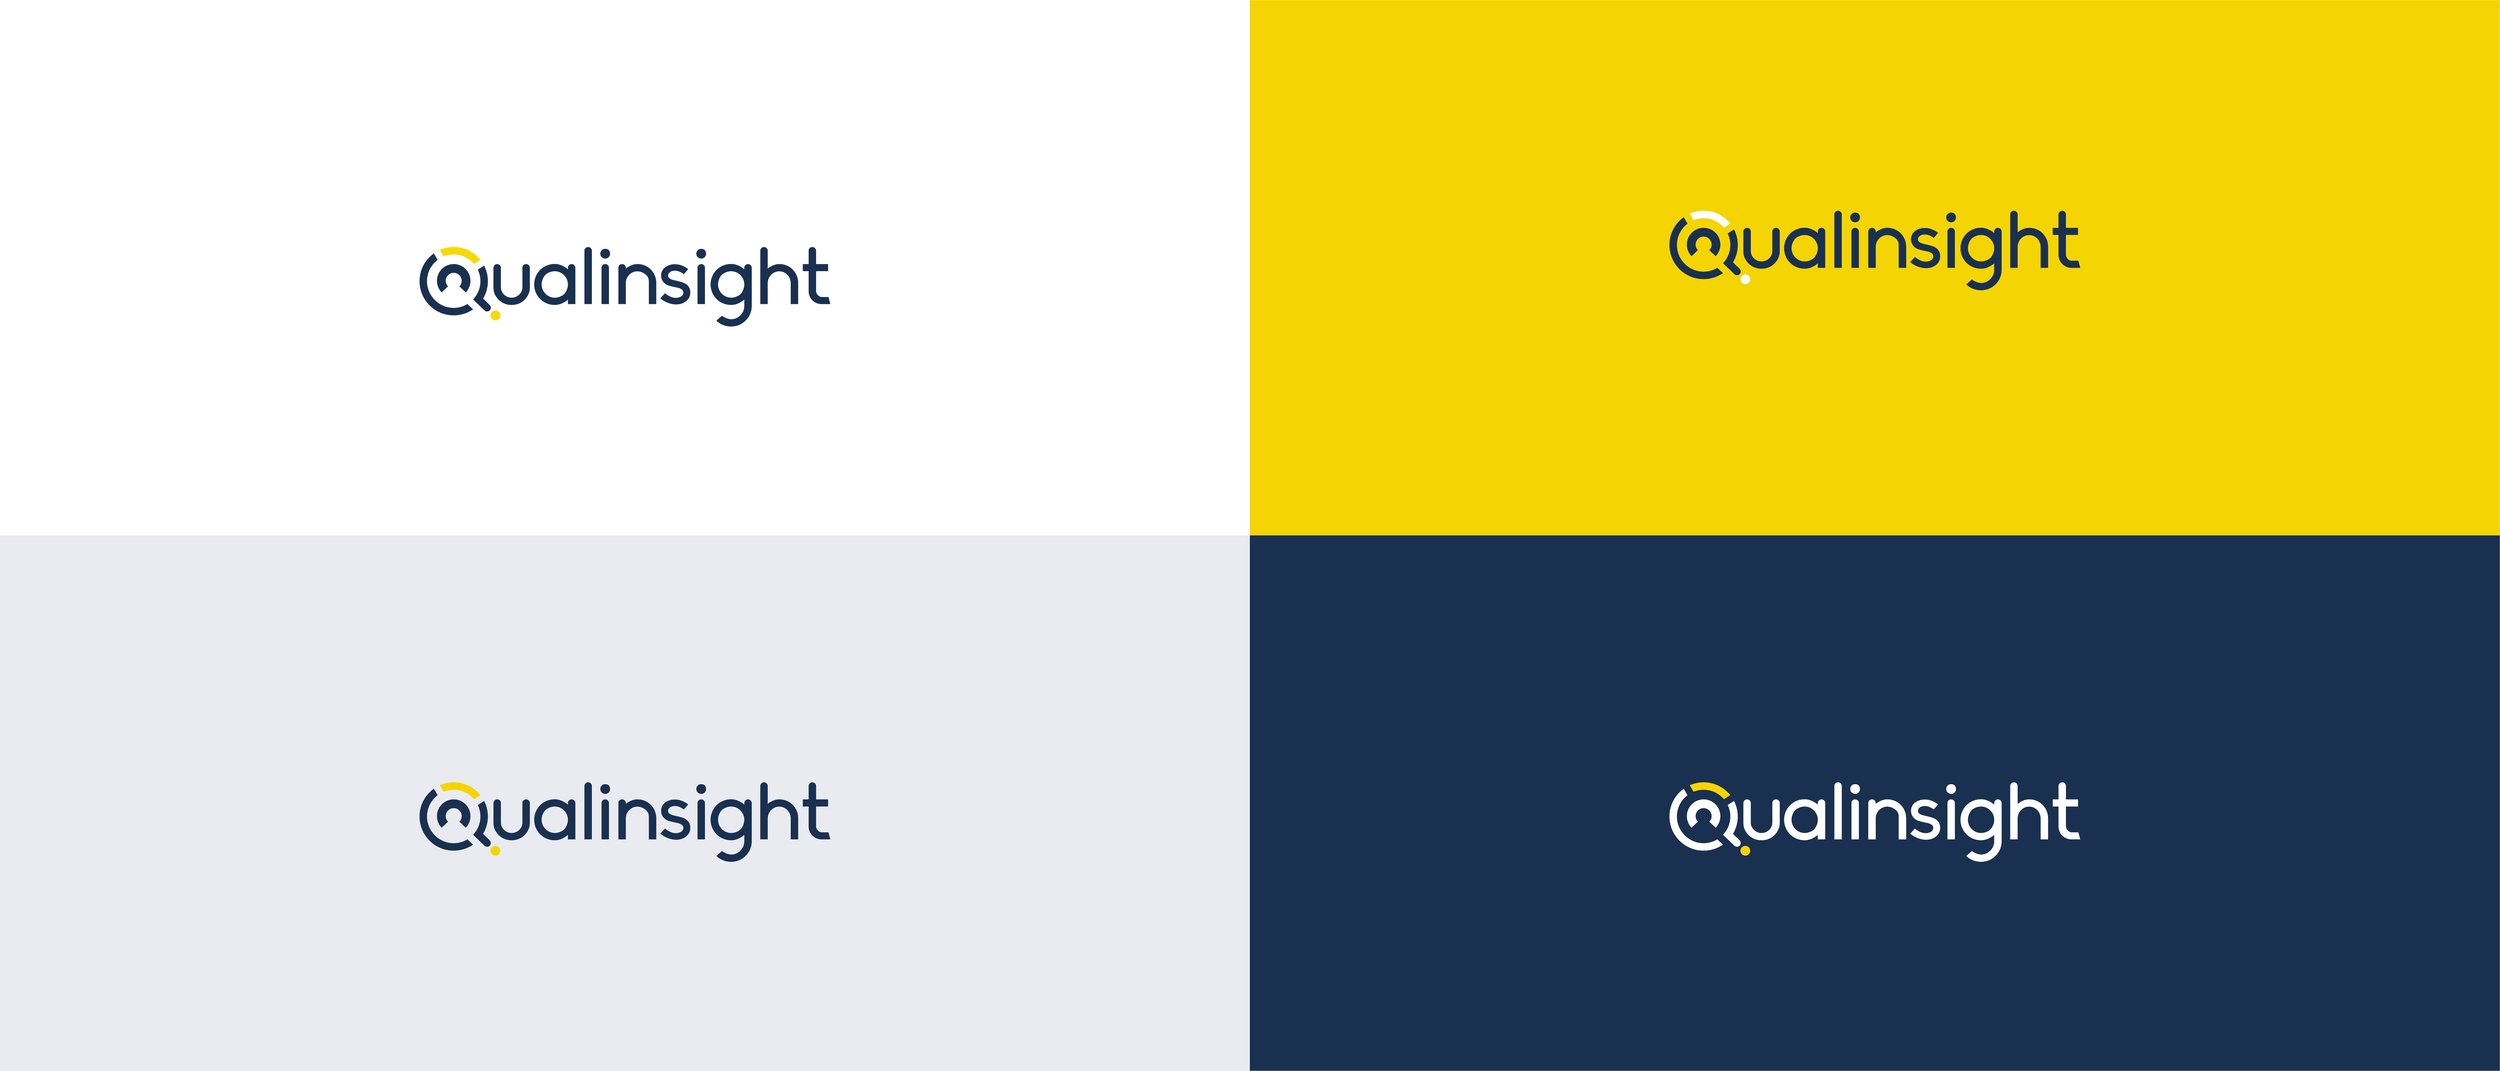 4_qualinsight__logo_4-couleurs.jpg